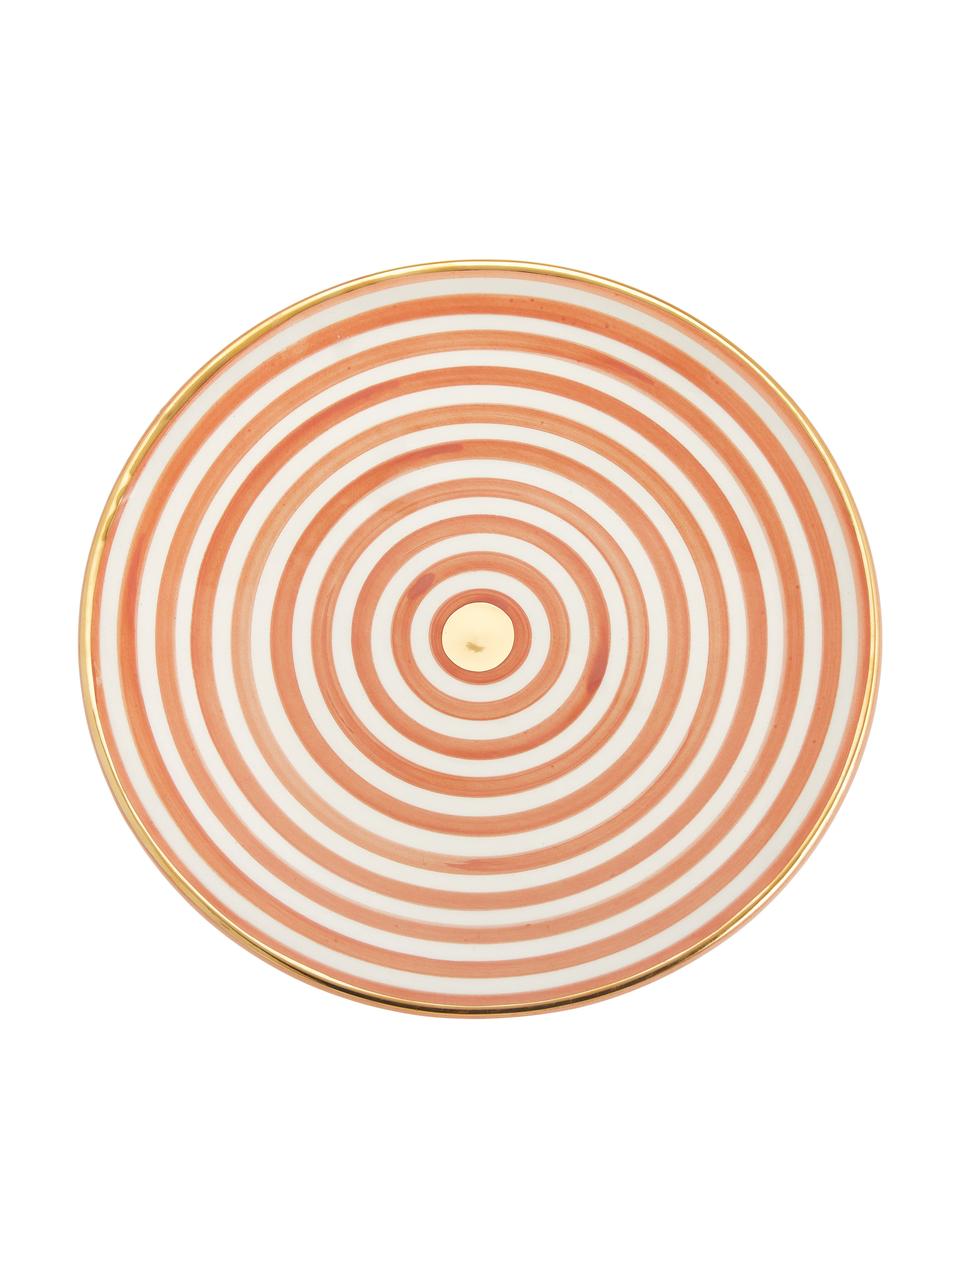 Plato llano artesanal Assiette, estilo marroquí, Cerámica, Naranja, crema, oro, Ø 26 cm